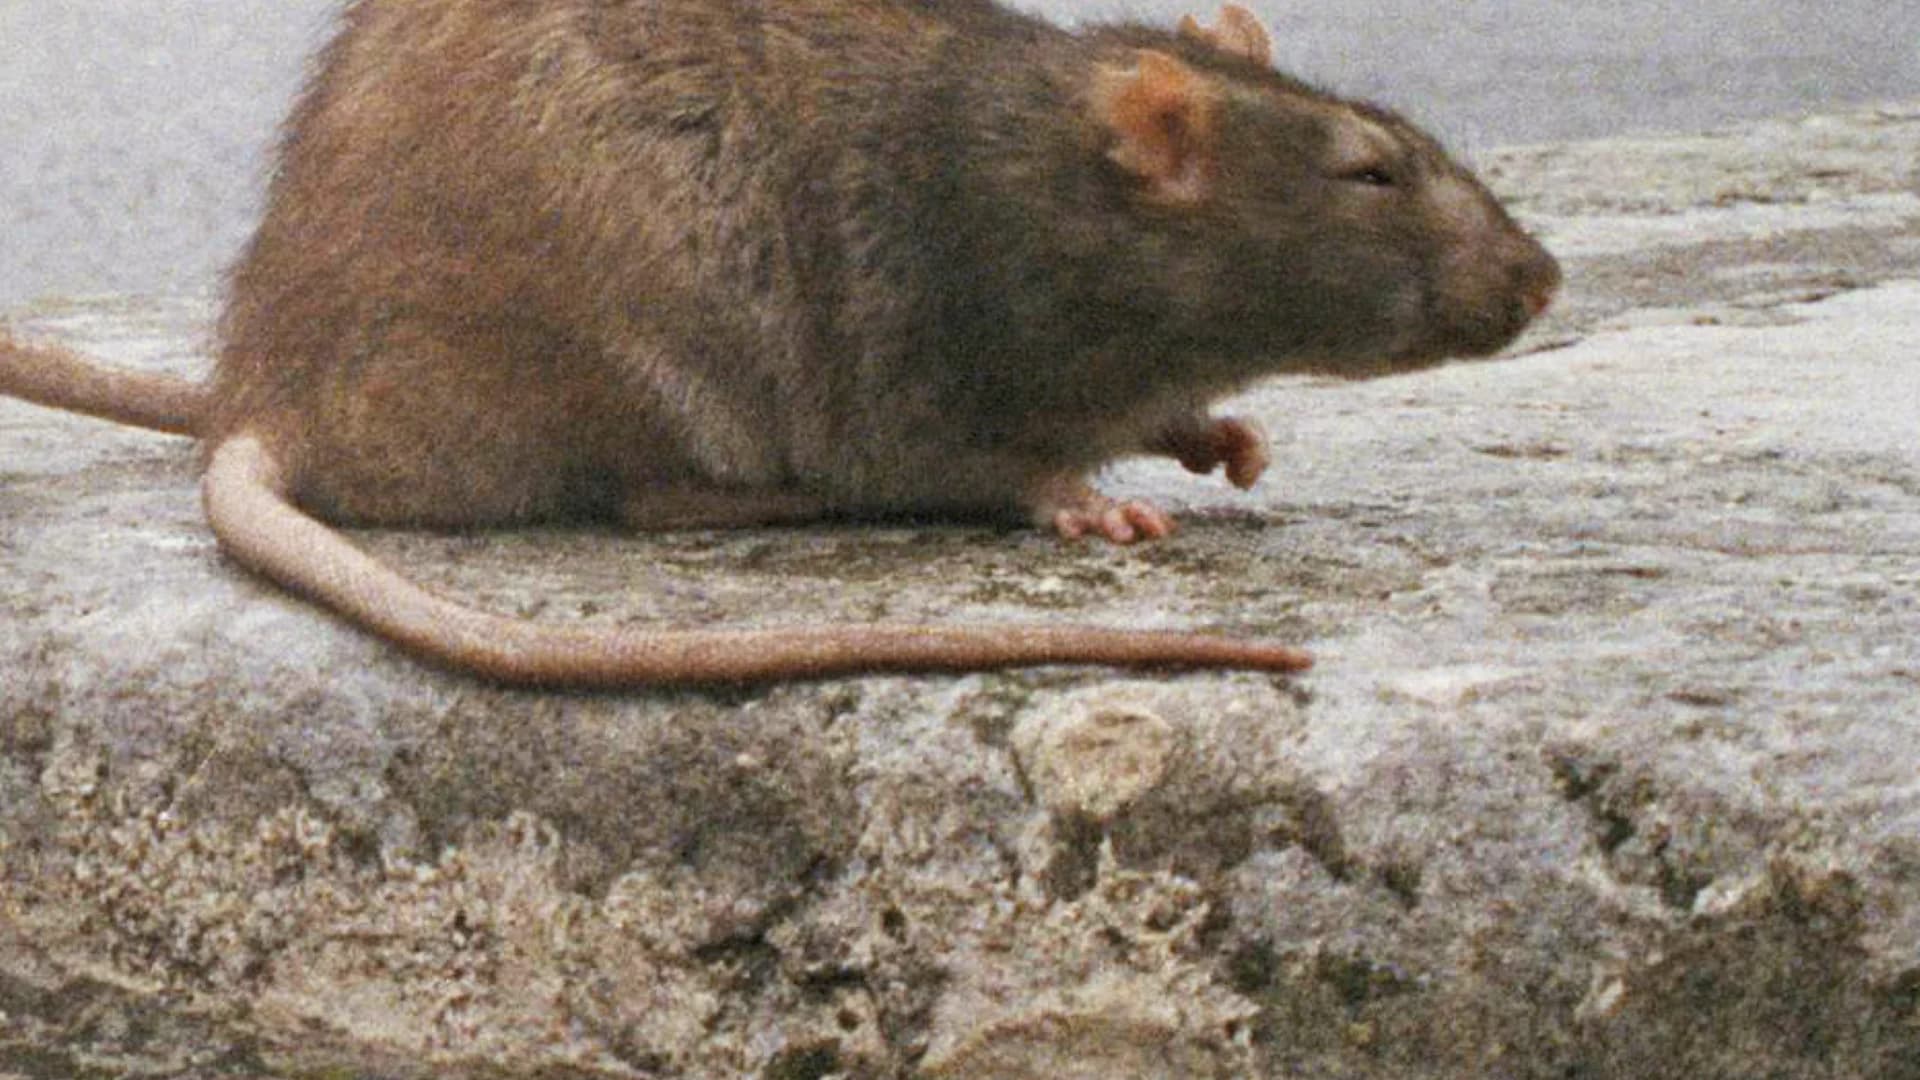 Rat race: Report ranks New York as second 'rattiest city' in US